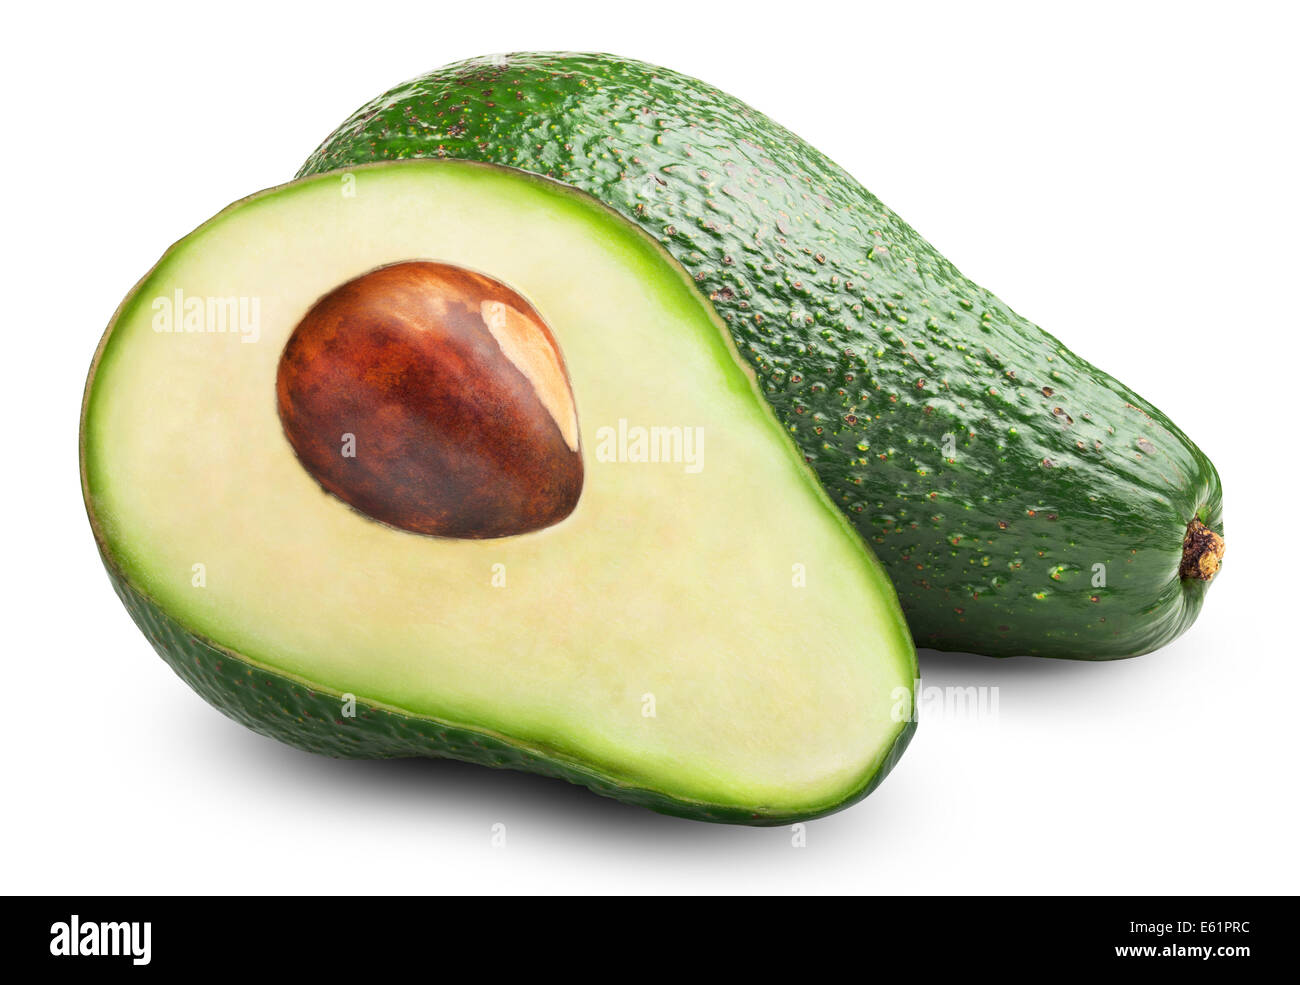 Avocado slice isolated on a white background Stock Photo